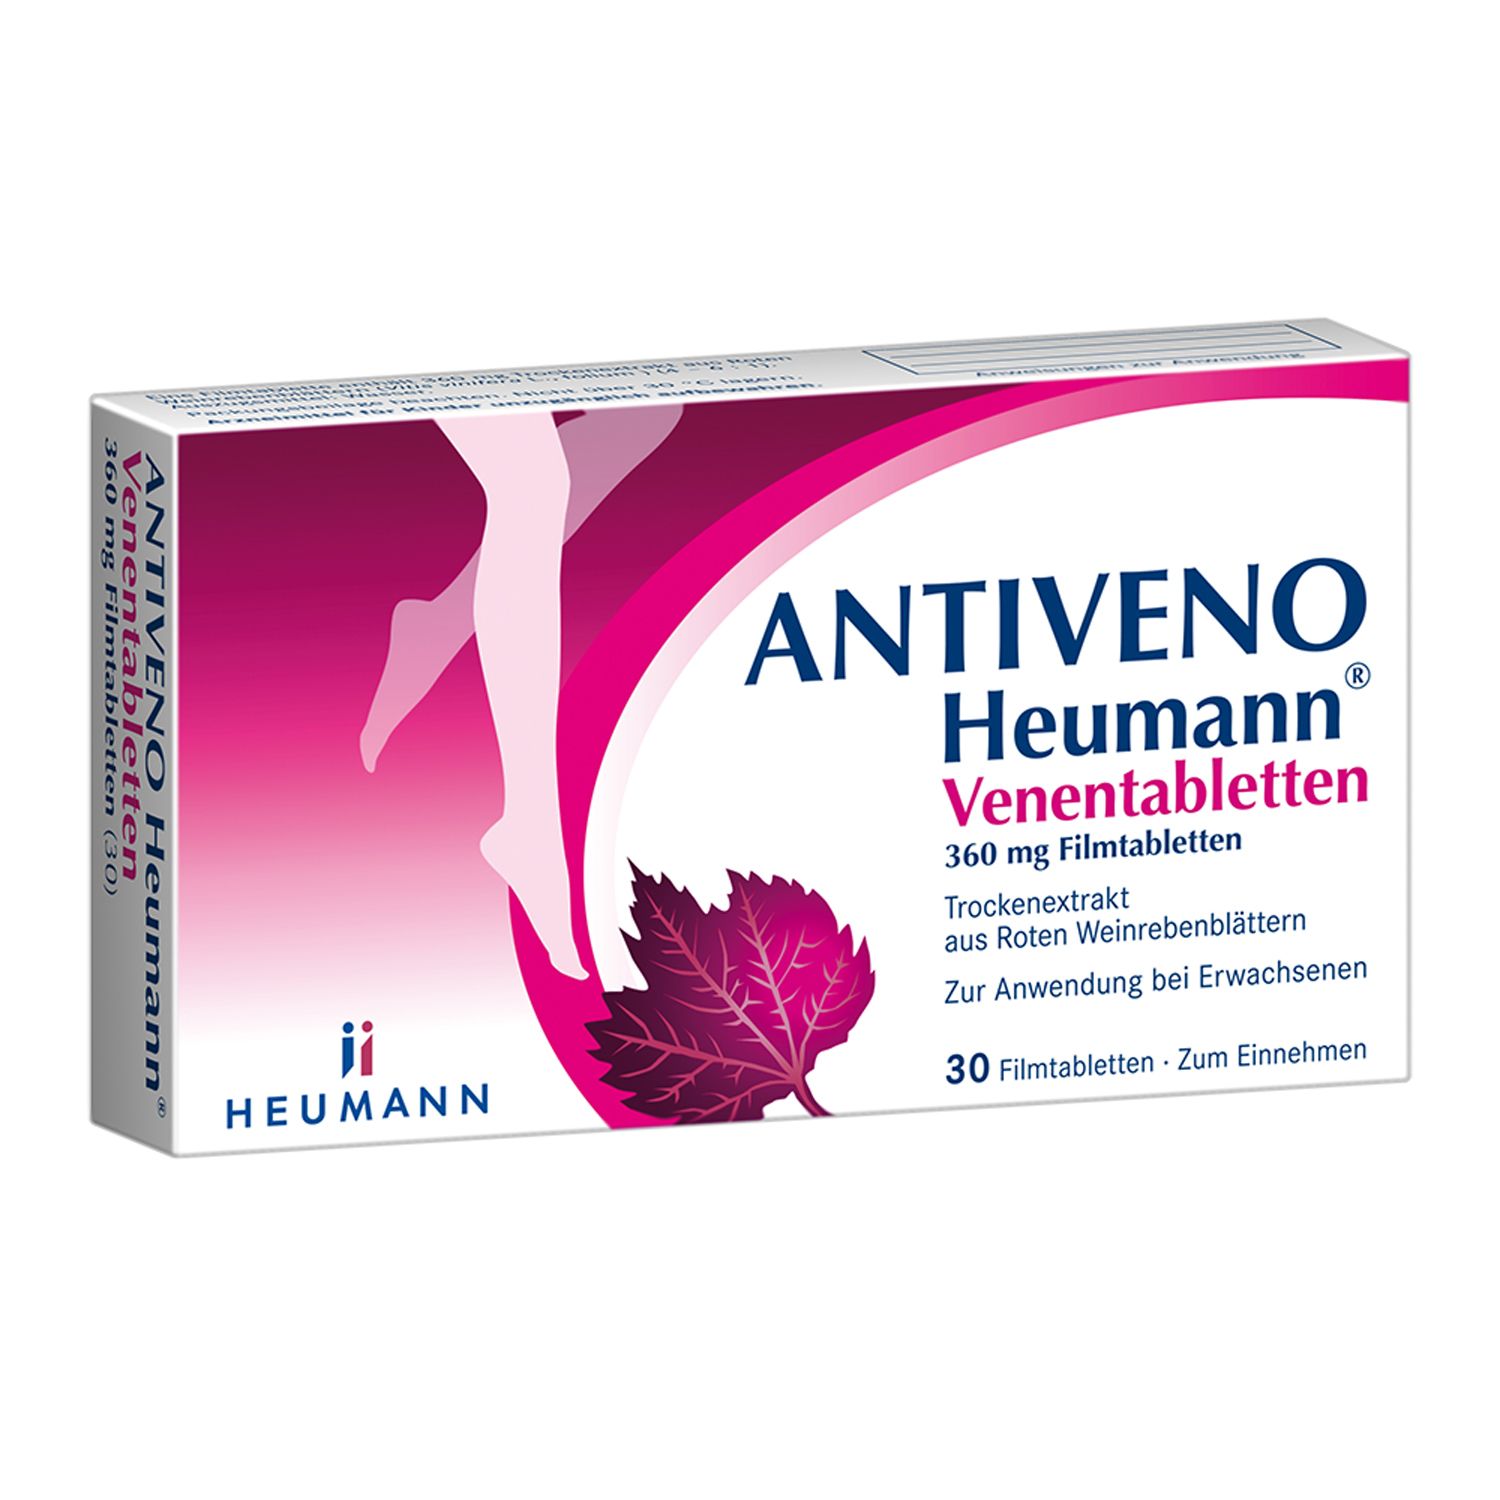 ANTIVENO Heumann® Venentabletten 360 mg